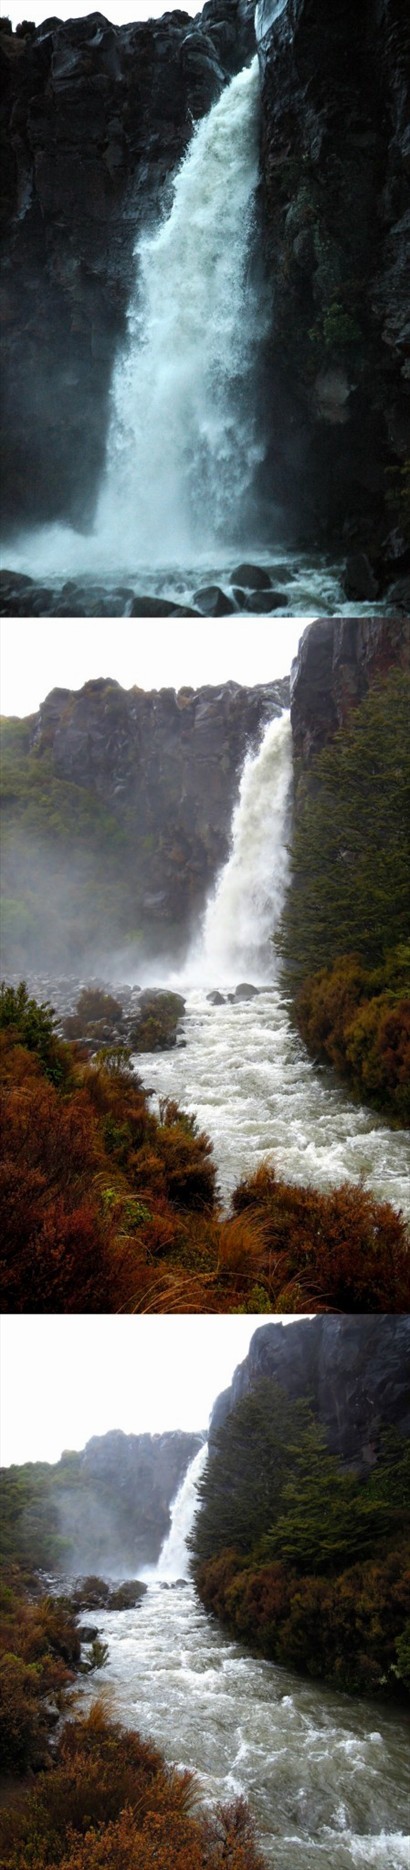 Taranaki Falls的水量、聲響、景觀極具氣勢，河水滾滾而下